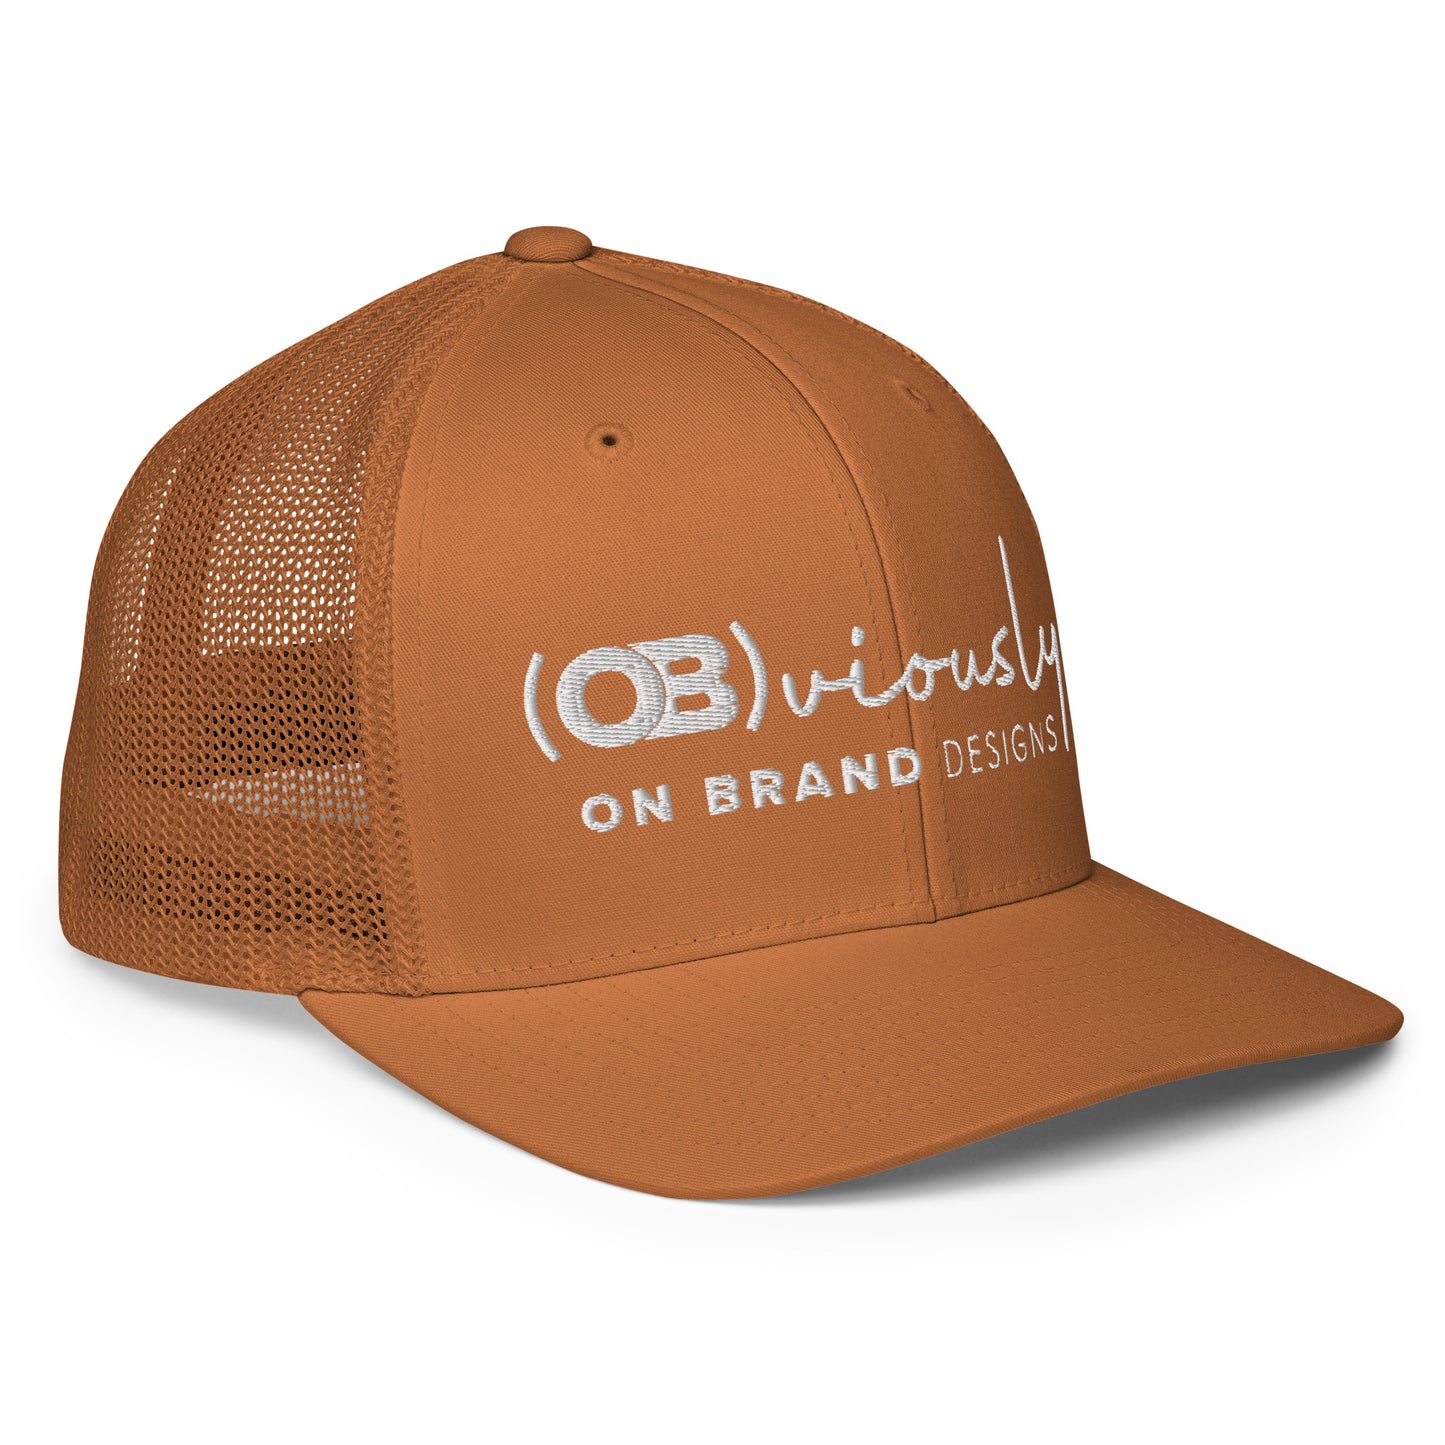 (OB)viously Mesh back trucker cap